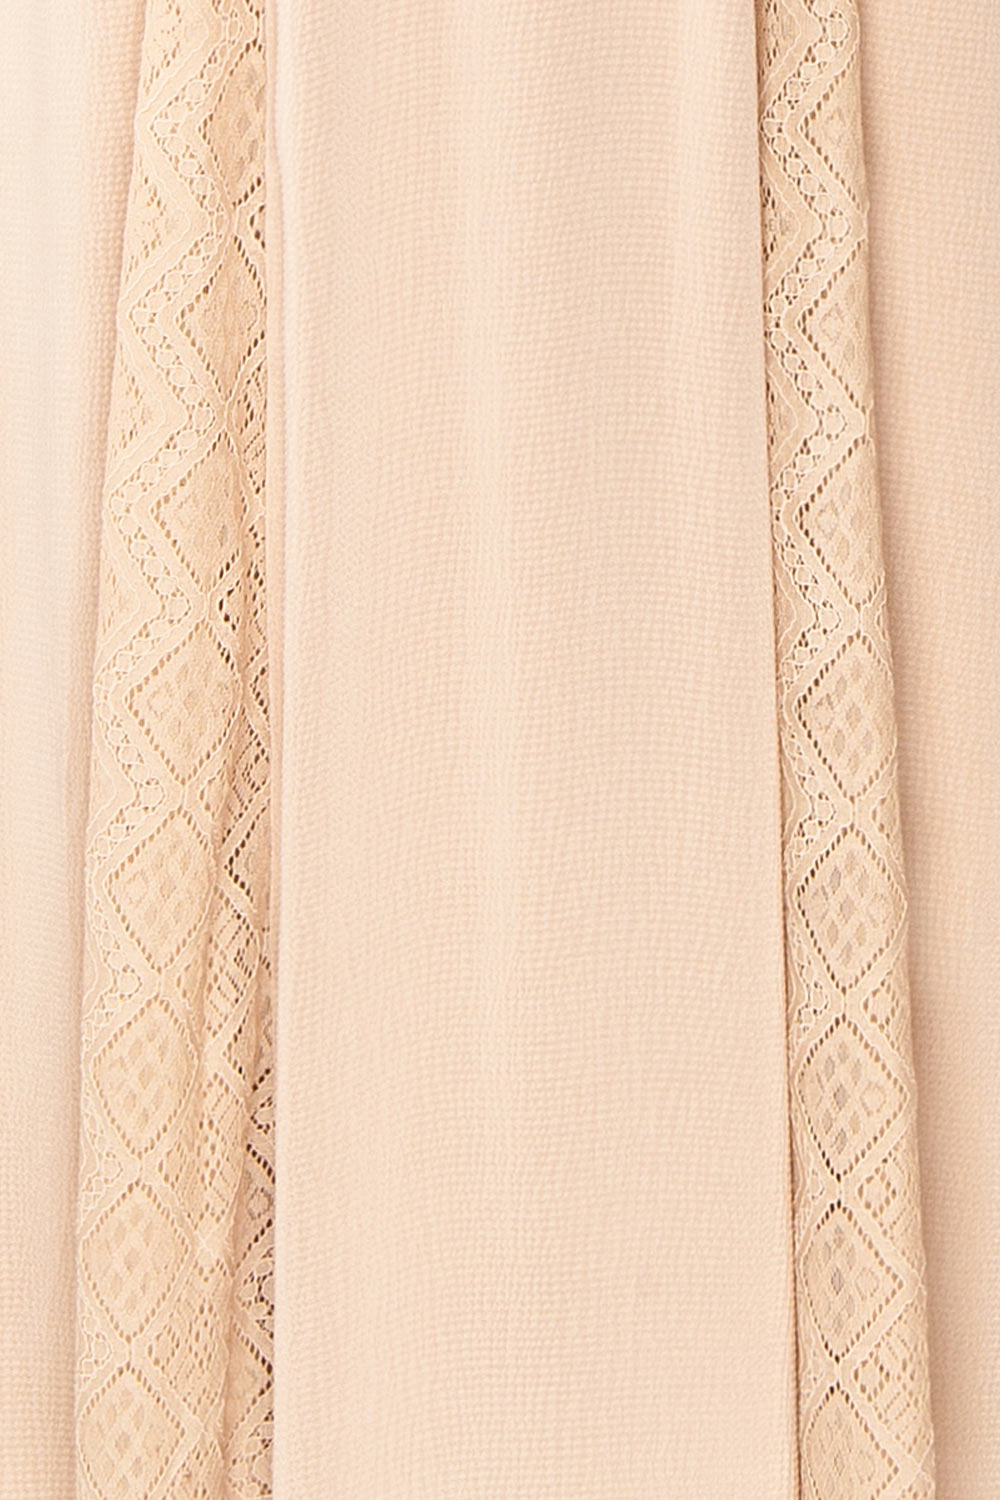 Sirina Long Sleeve Beige Maxi Dress w/ Lace Details | Boutique 1861 fabric 